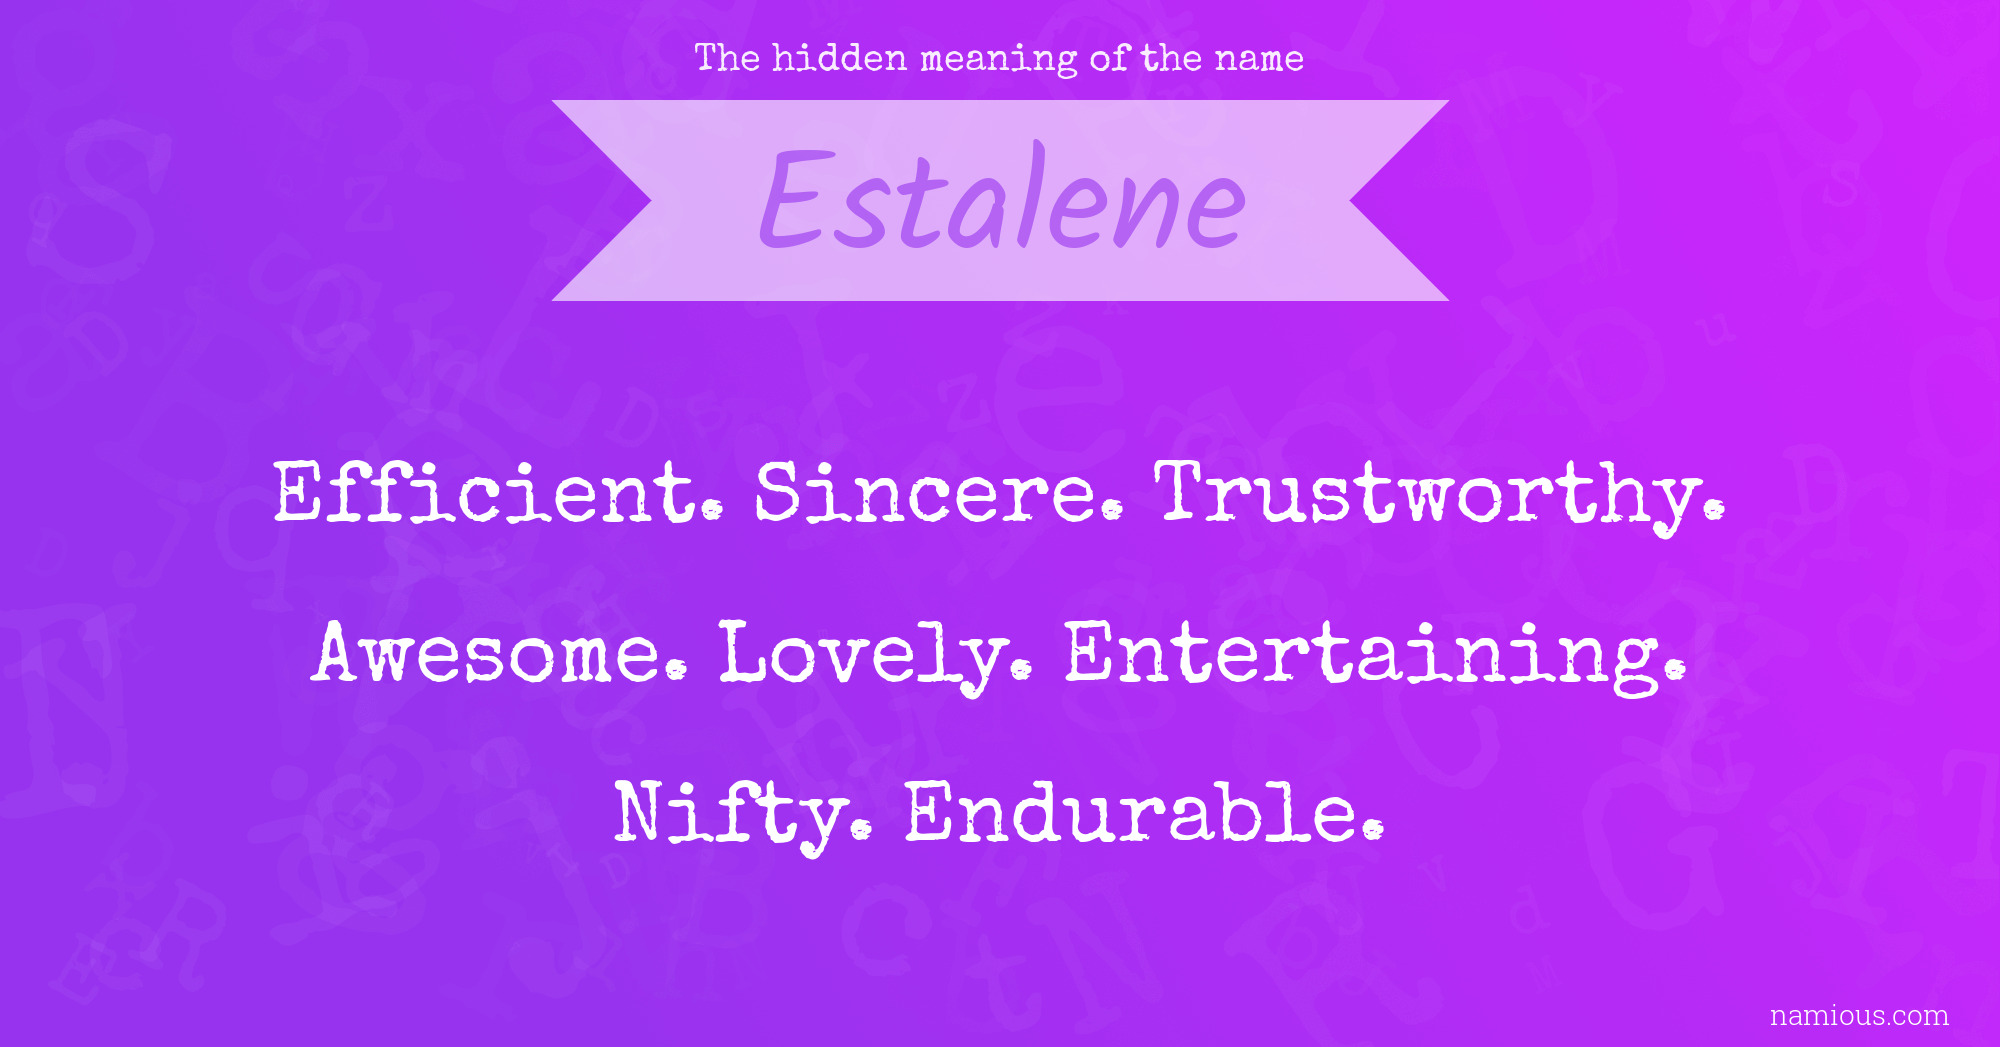 The hidden meaning of the name Estalene